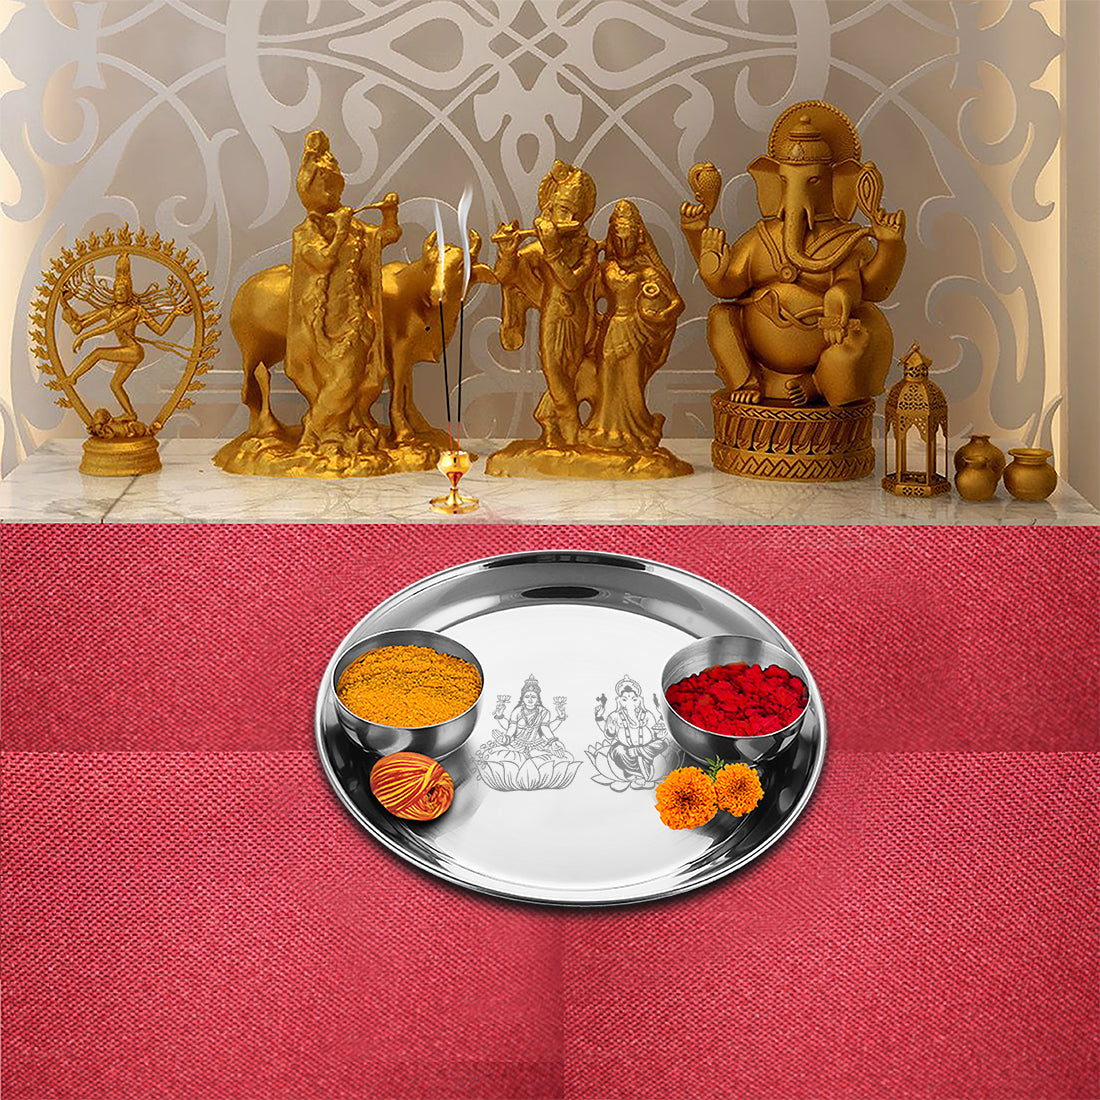 Stainless Steel Pooja Thali Set Laxmi & Ganesh